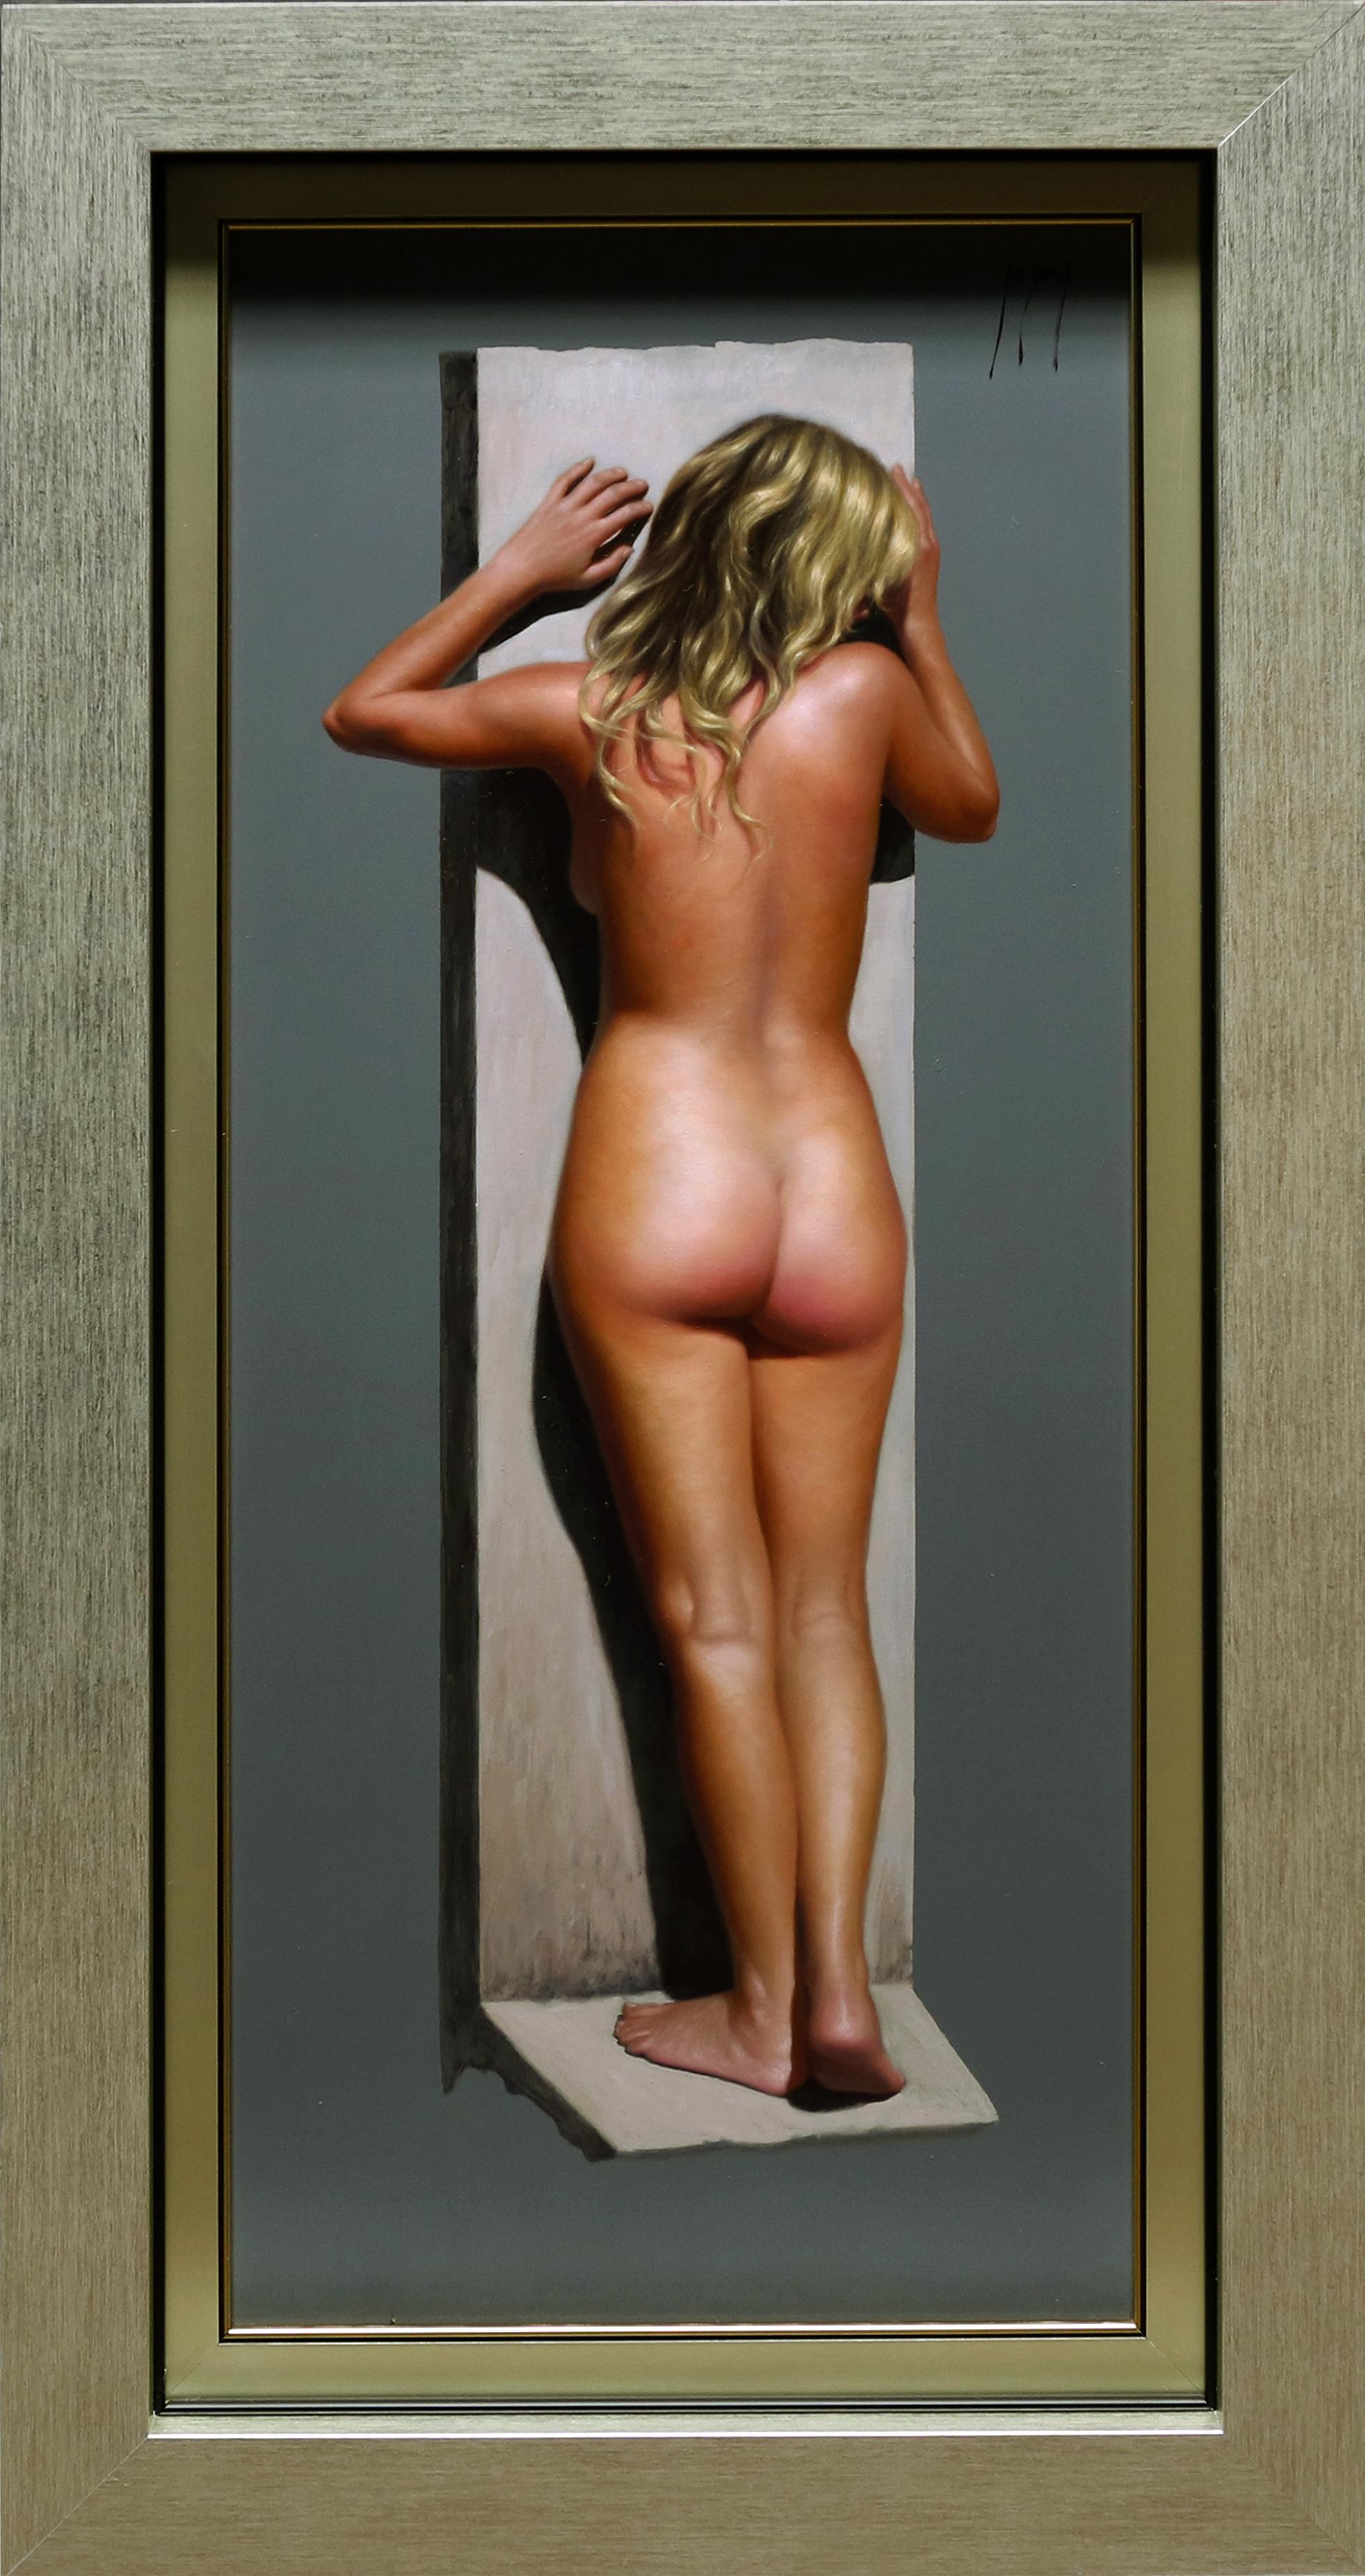 Jose Borrell Nude Painting - On the Verge